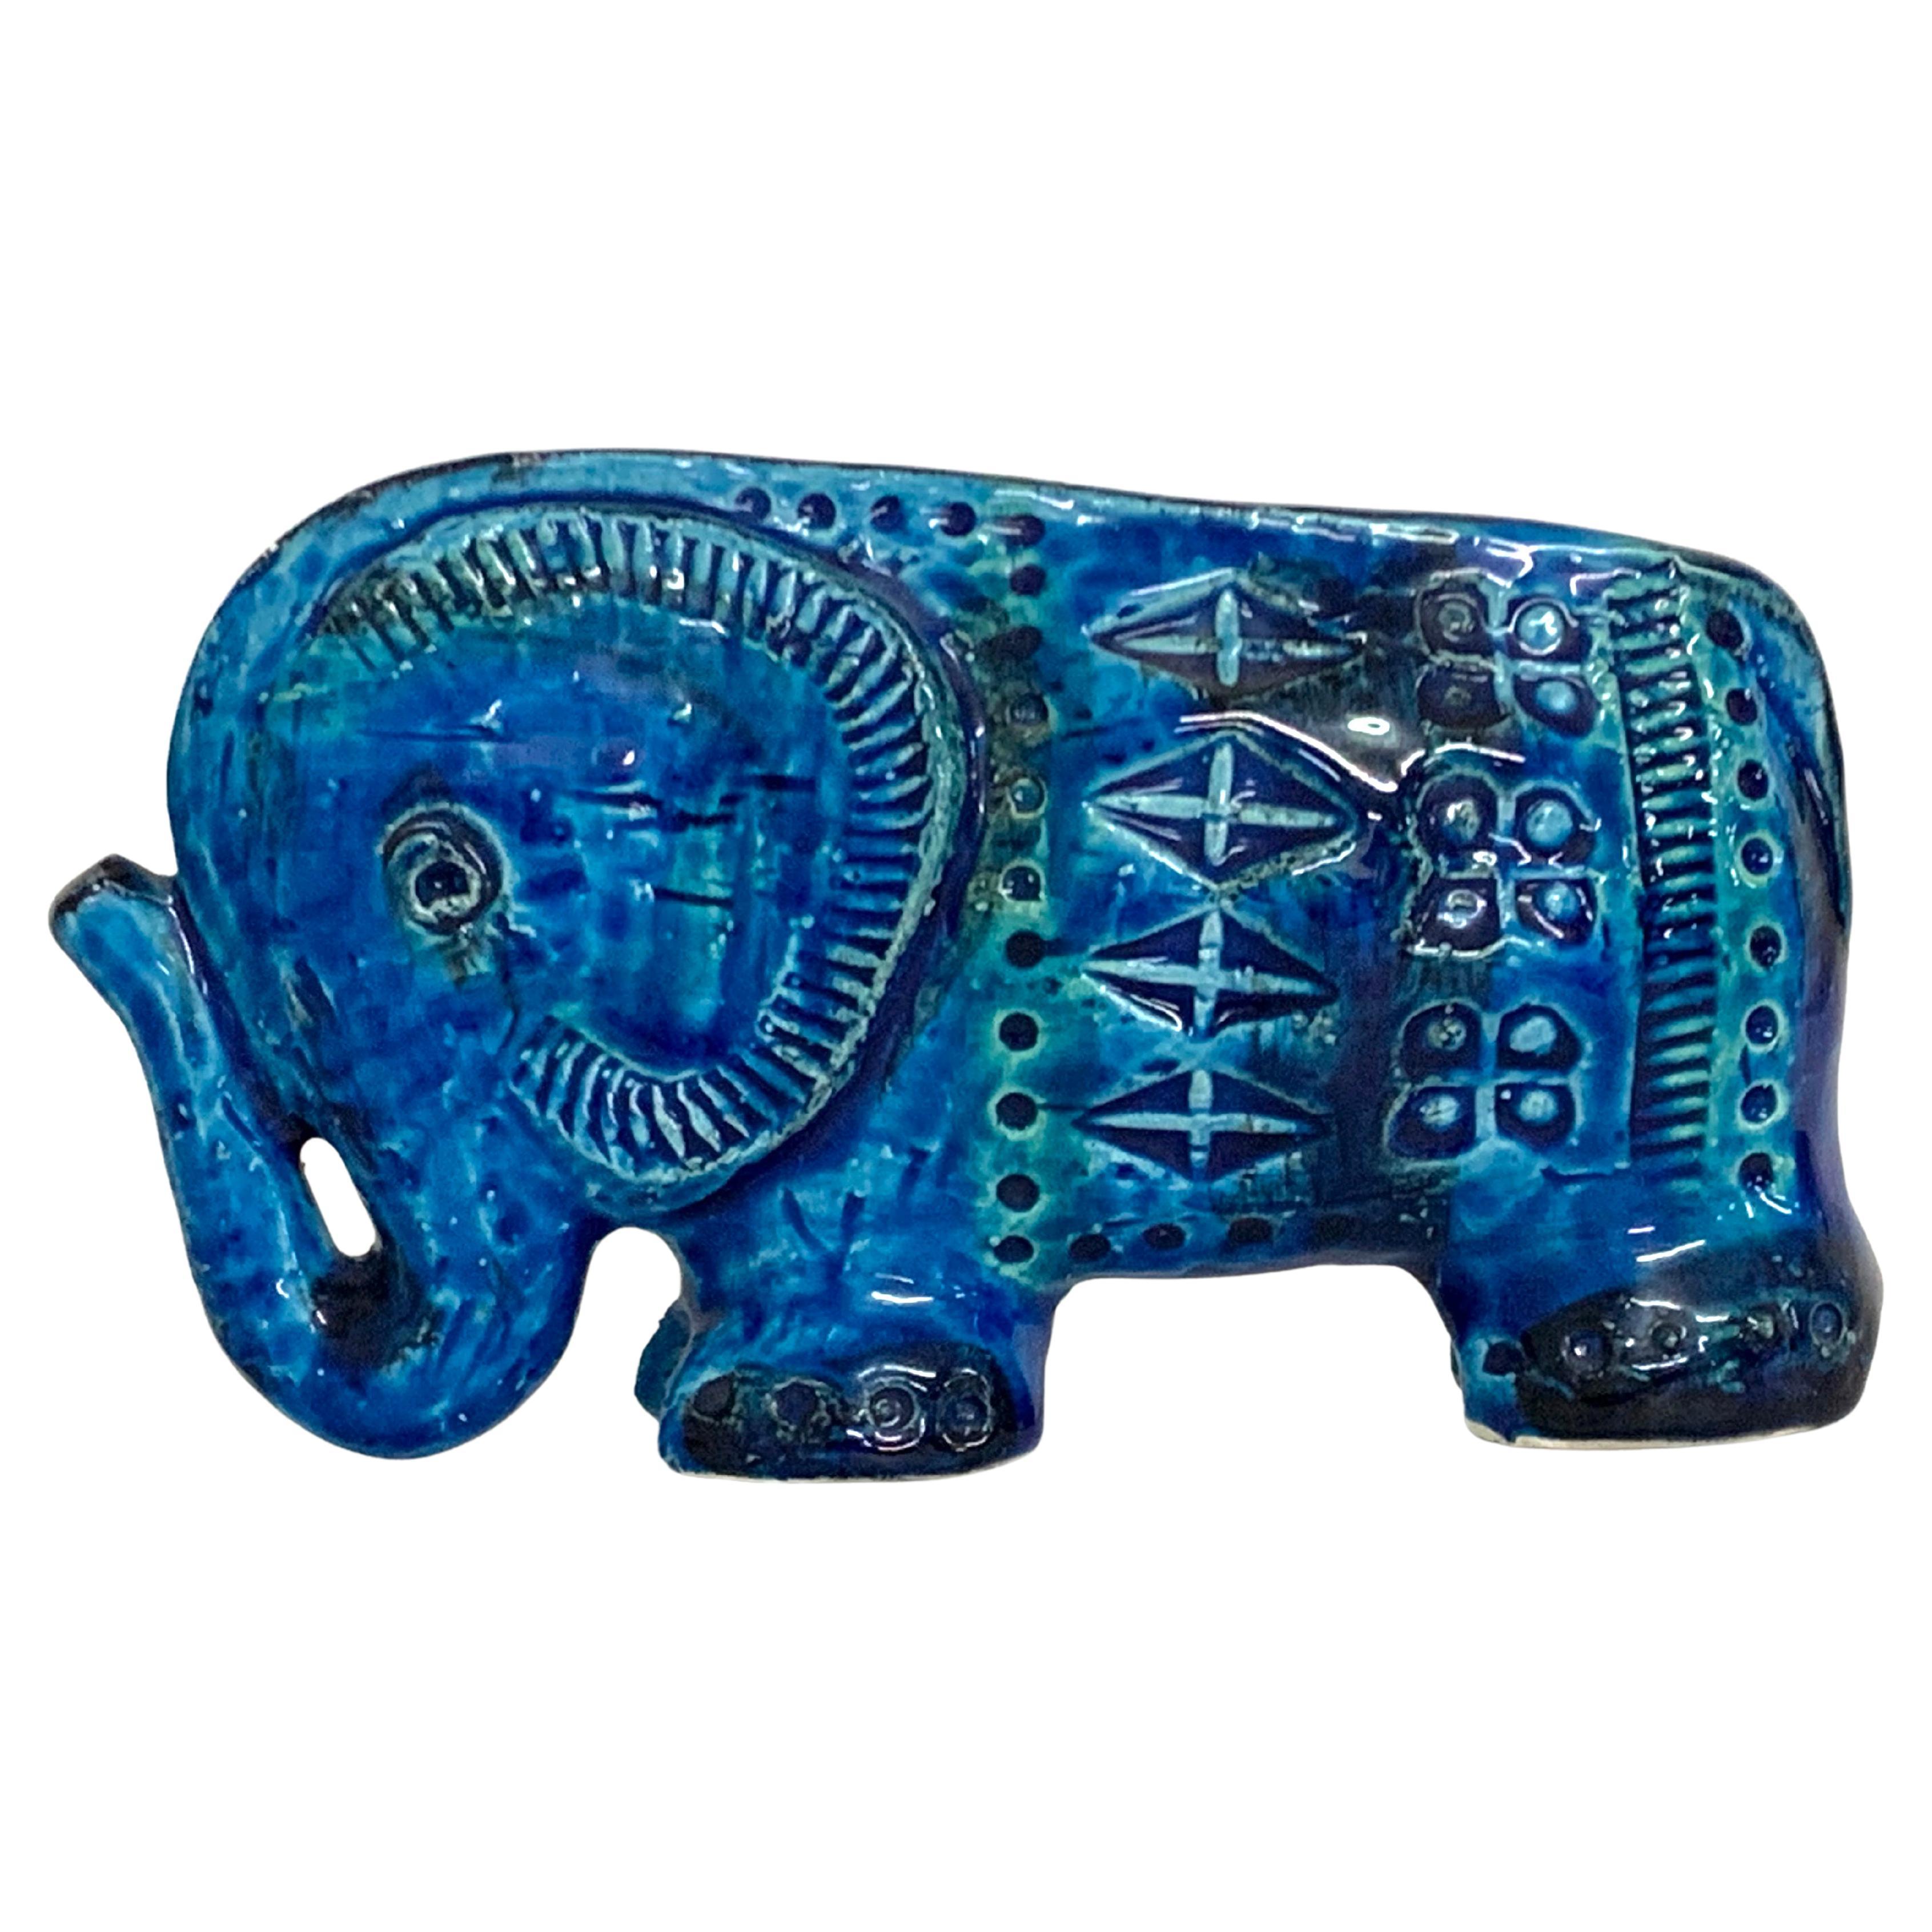 Bitossi Aldo Londi Rimini Blue Elephant Italy C.1968